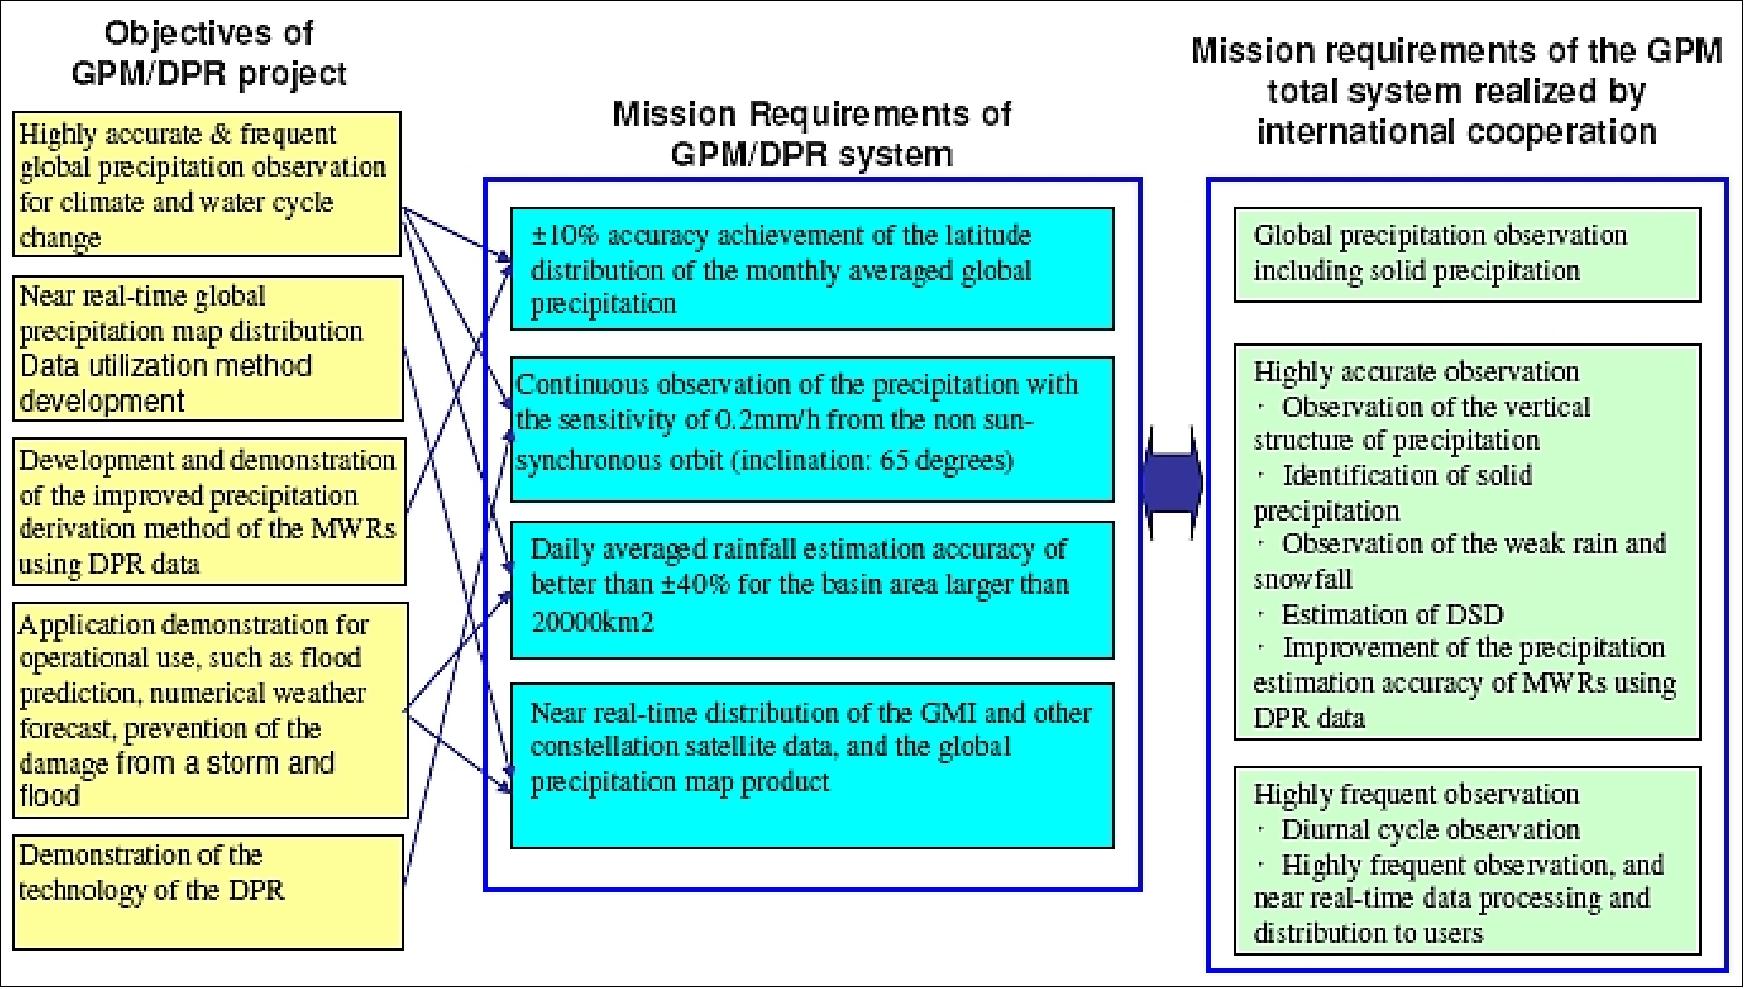 Figure 63: Goals and objectives of JAXA's GPM/DPR project (image credit: JAXA) 125)